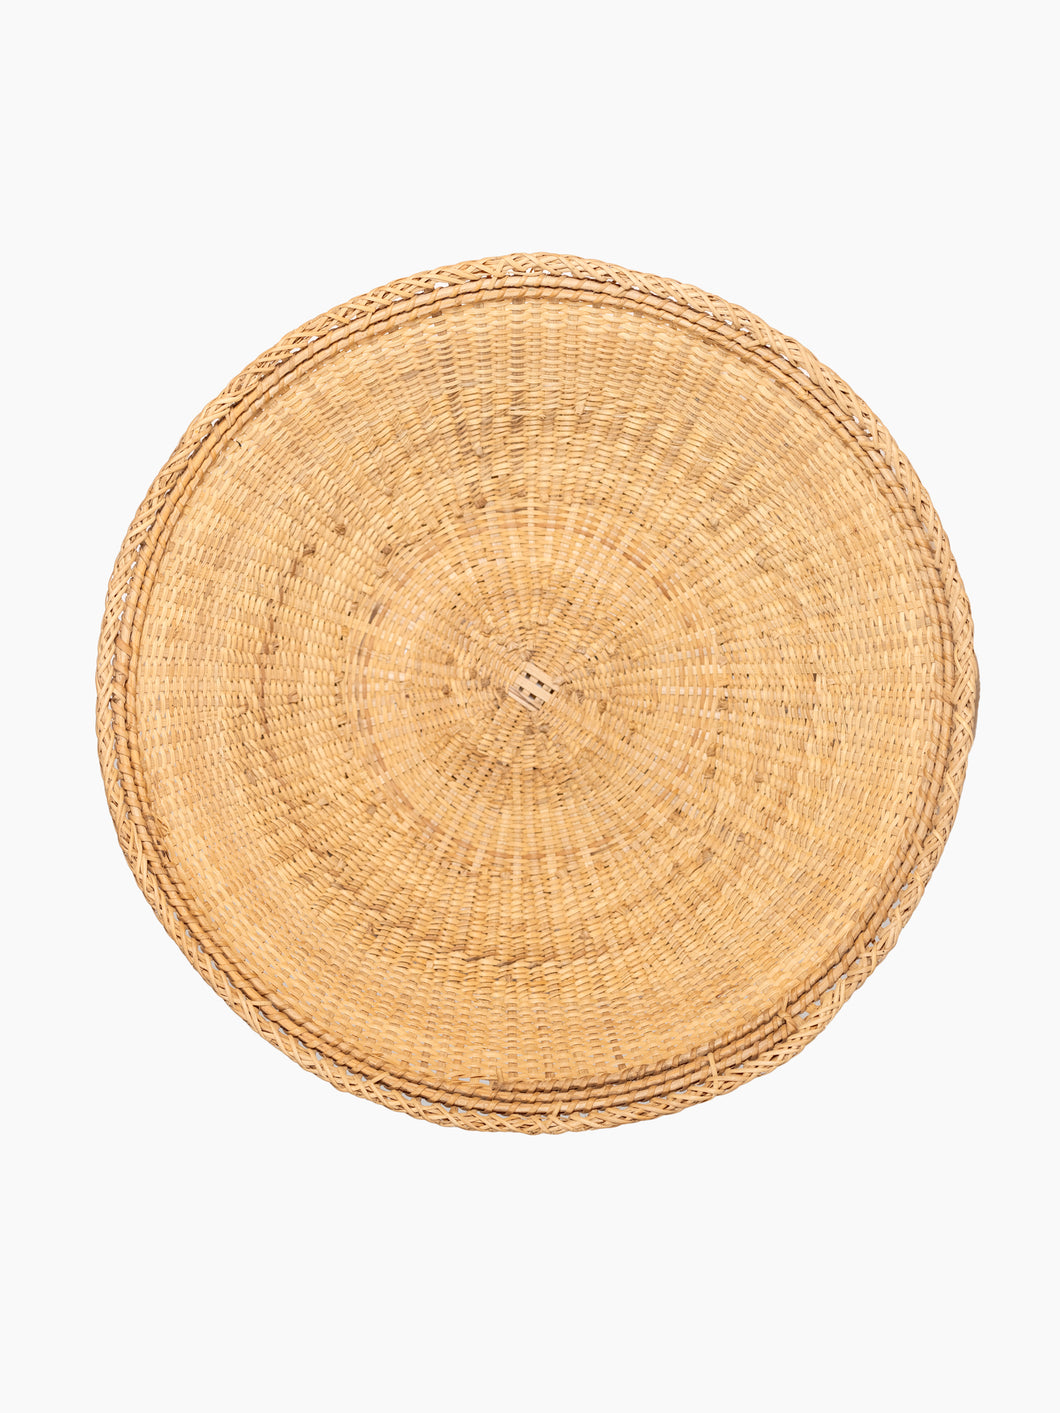 Natural Xotehe Baskets by Yanomami